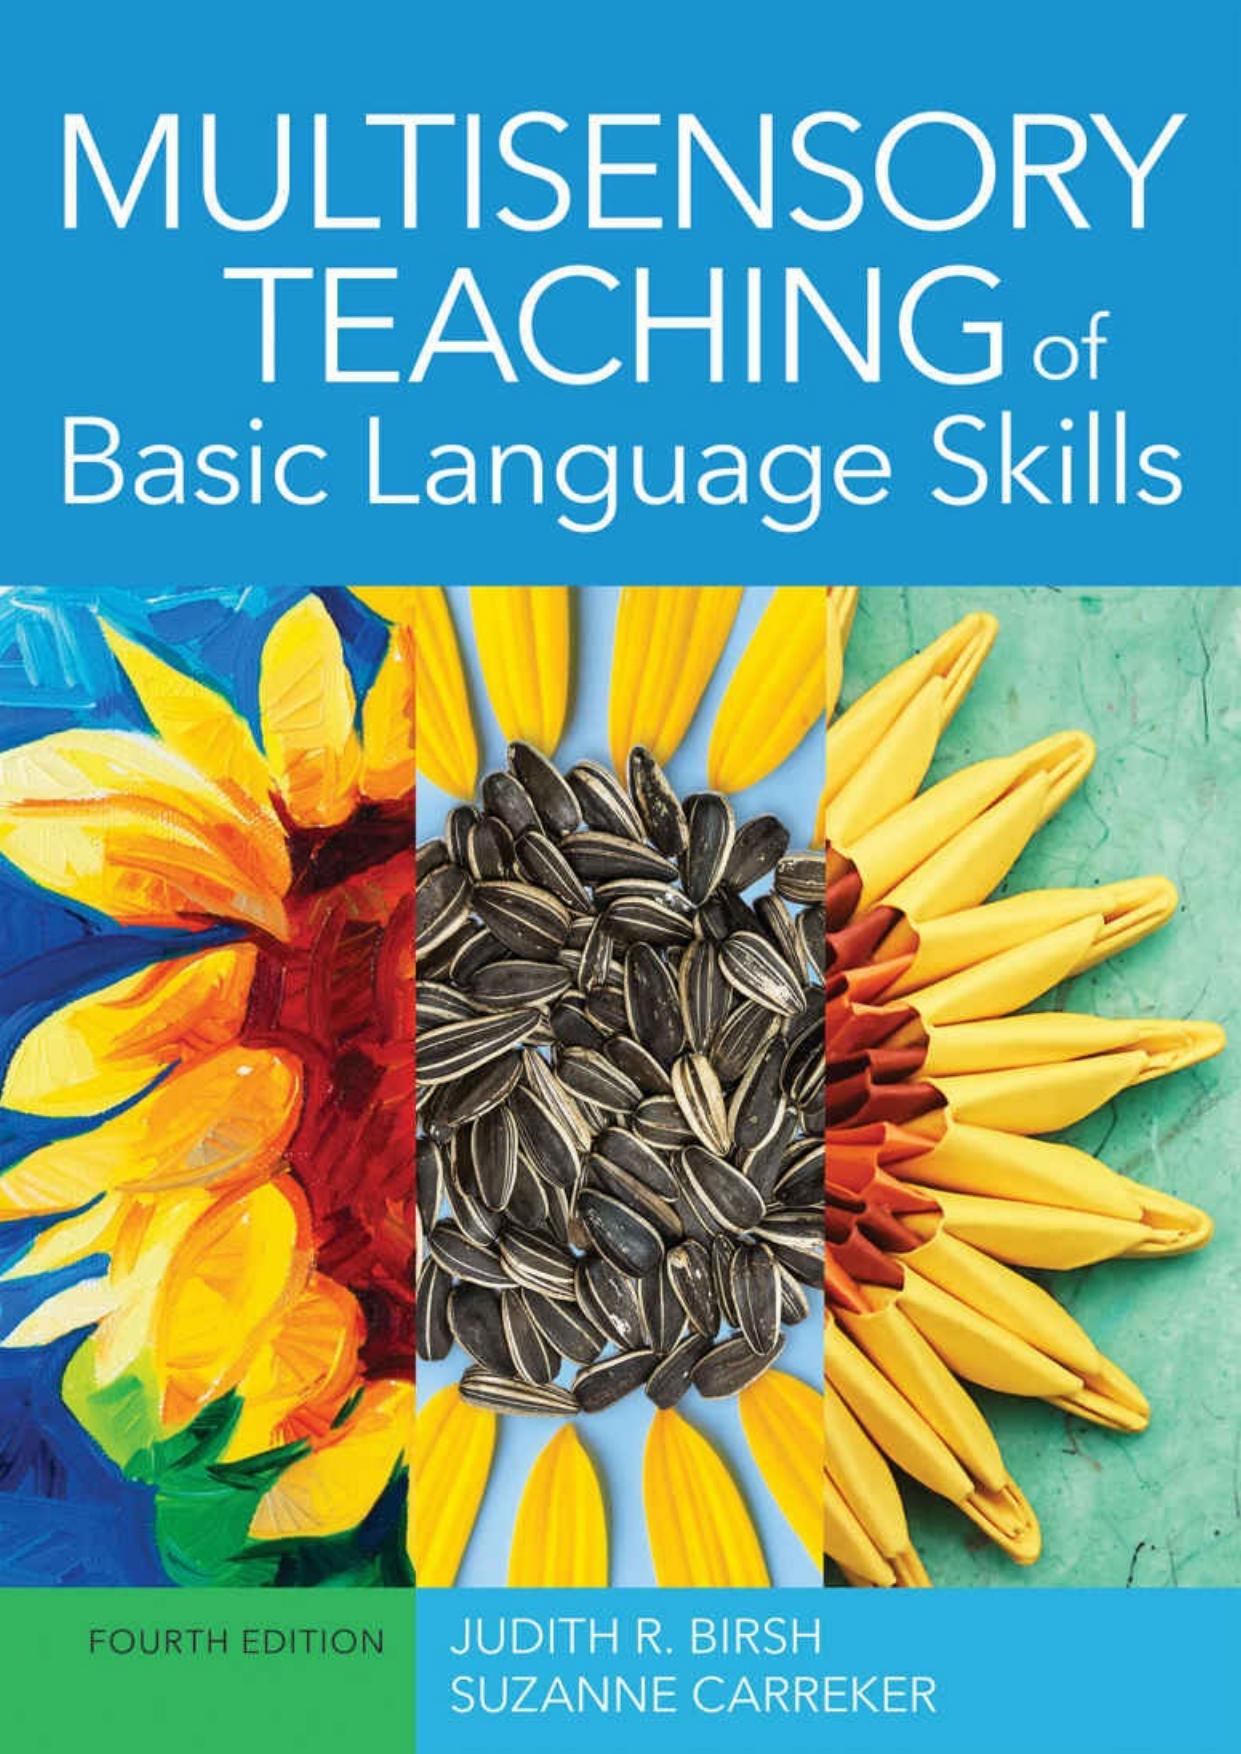 multisensory-teaching-of-basic-language-skills-4th-edition-by-judith-r